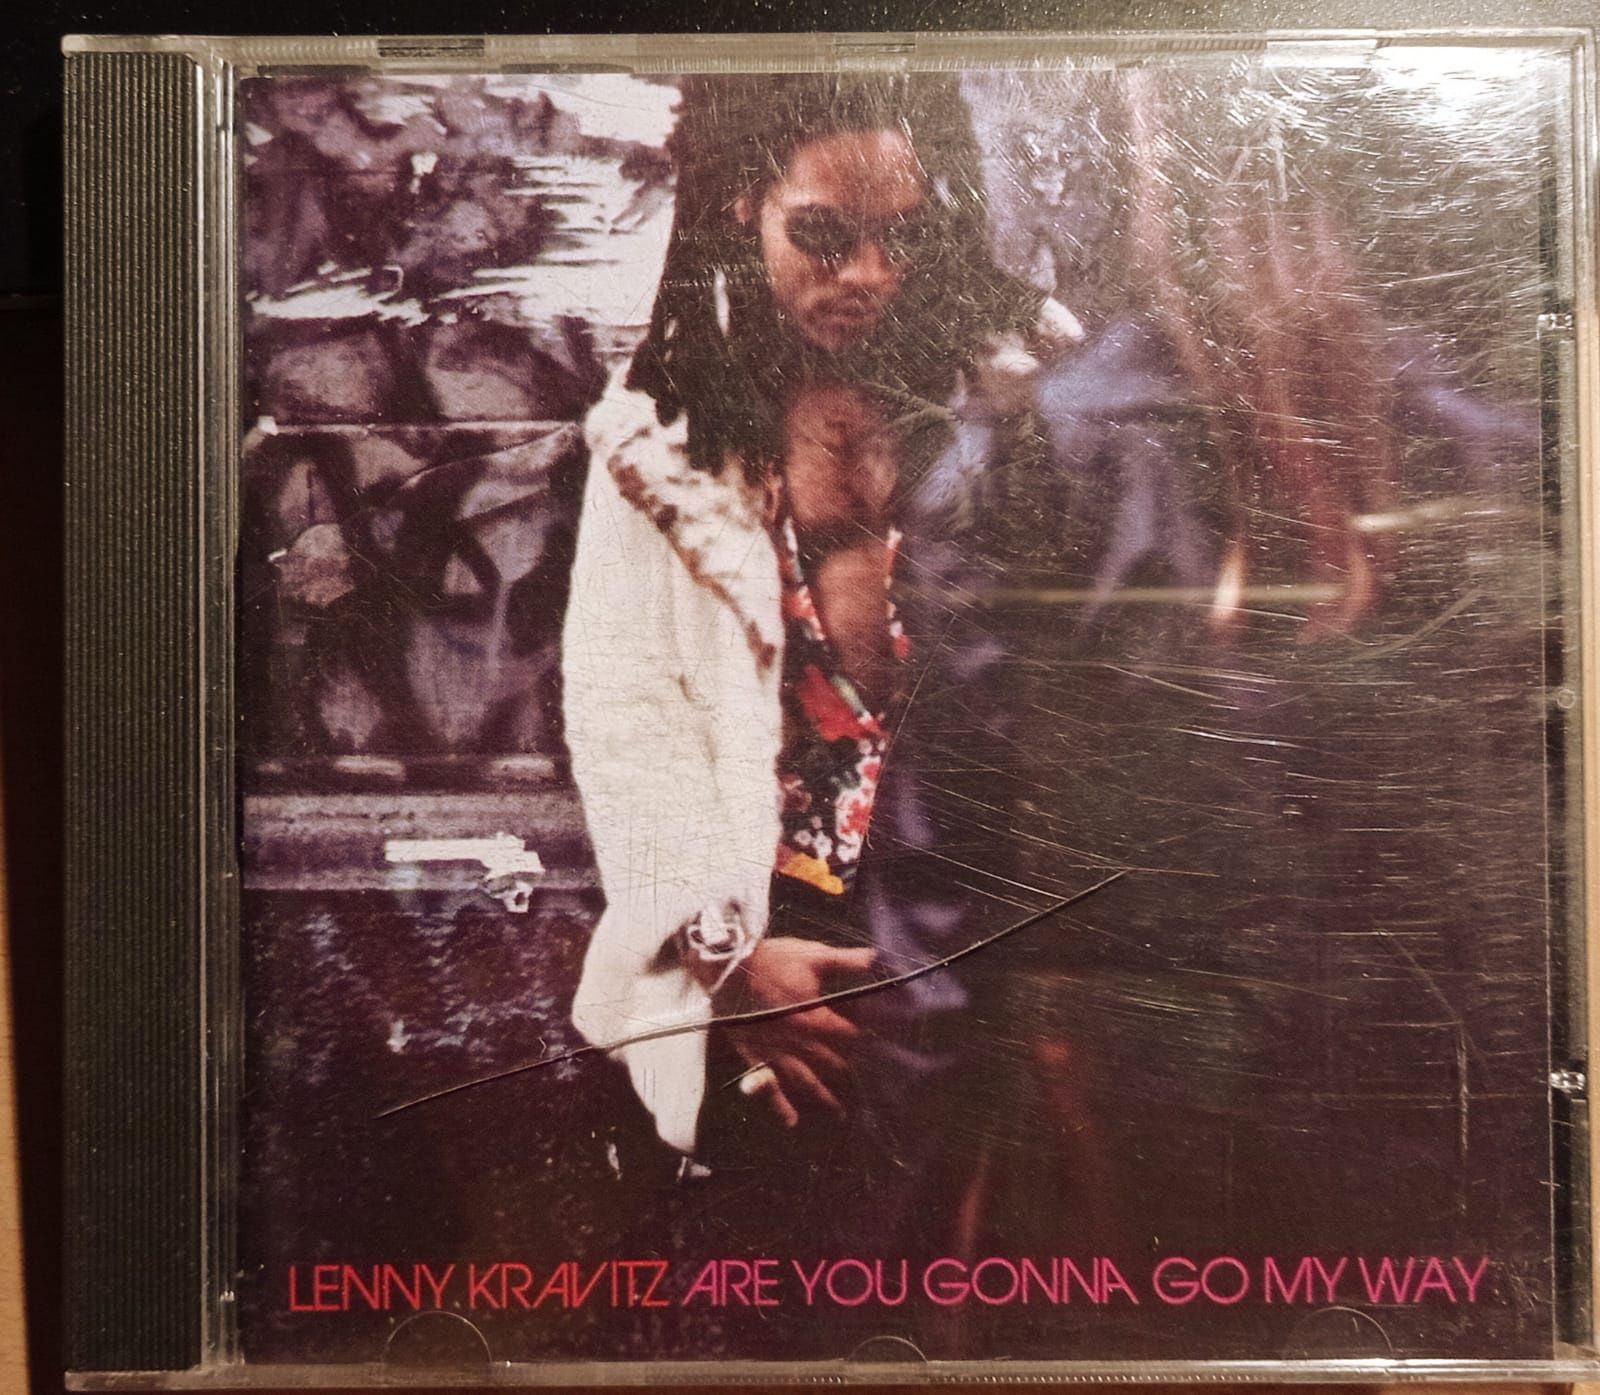 Lenny Kravitz płyta CD "Are You Gonna Go My Way"